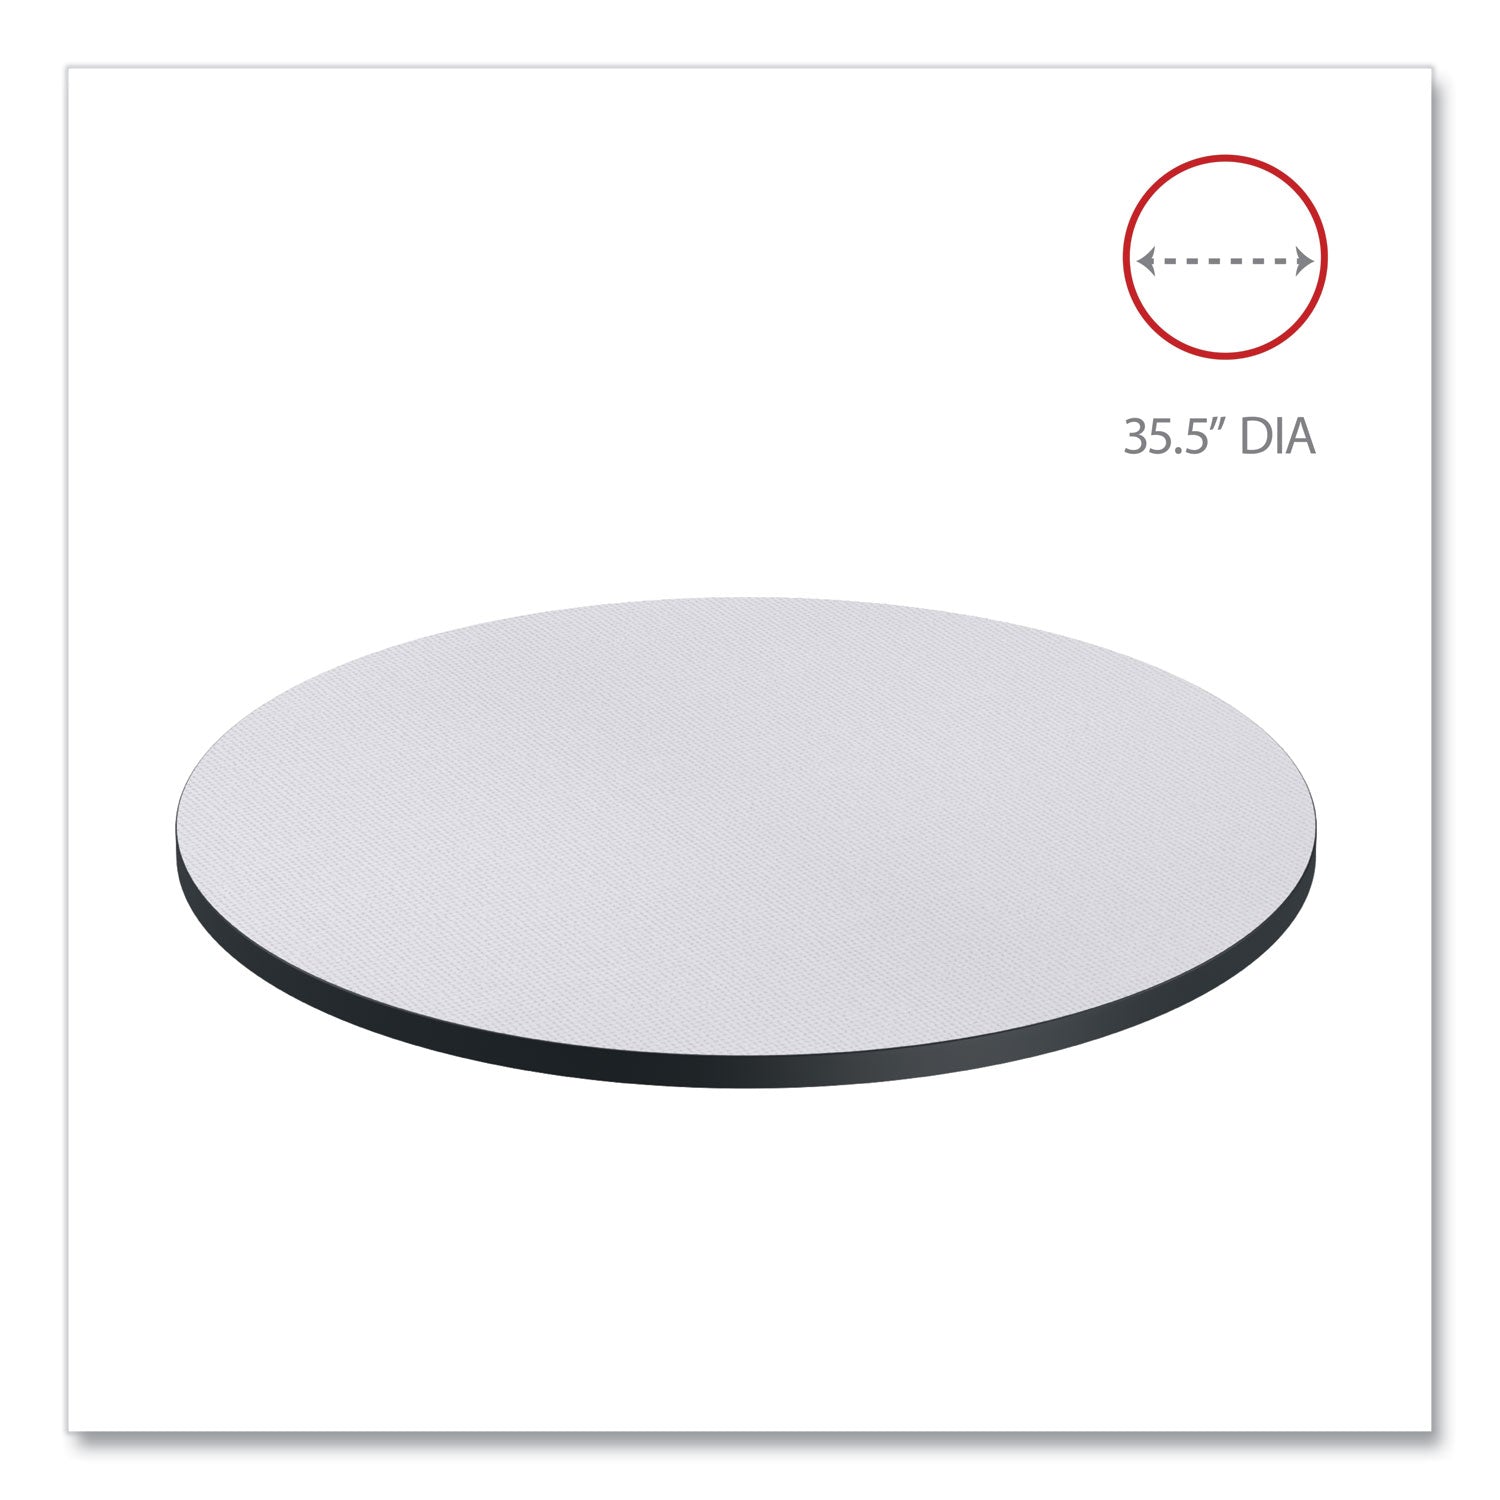 reversible-laminate-table-top-round-355-diameter-white-gray_alettrd36wg - 2